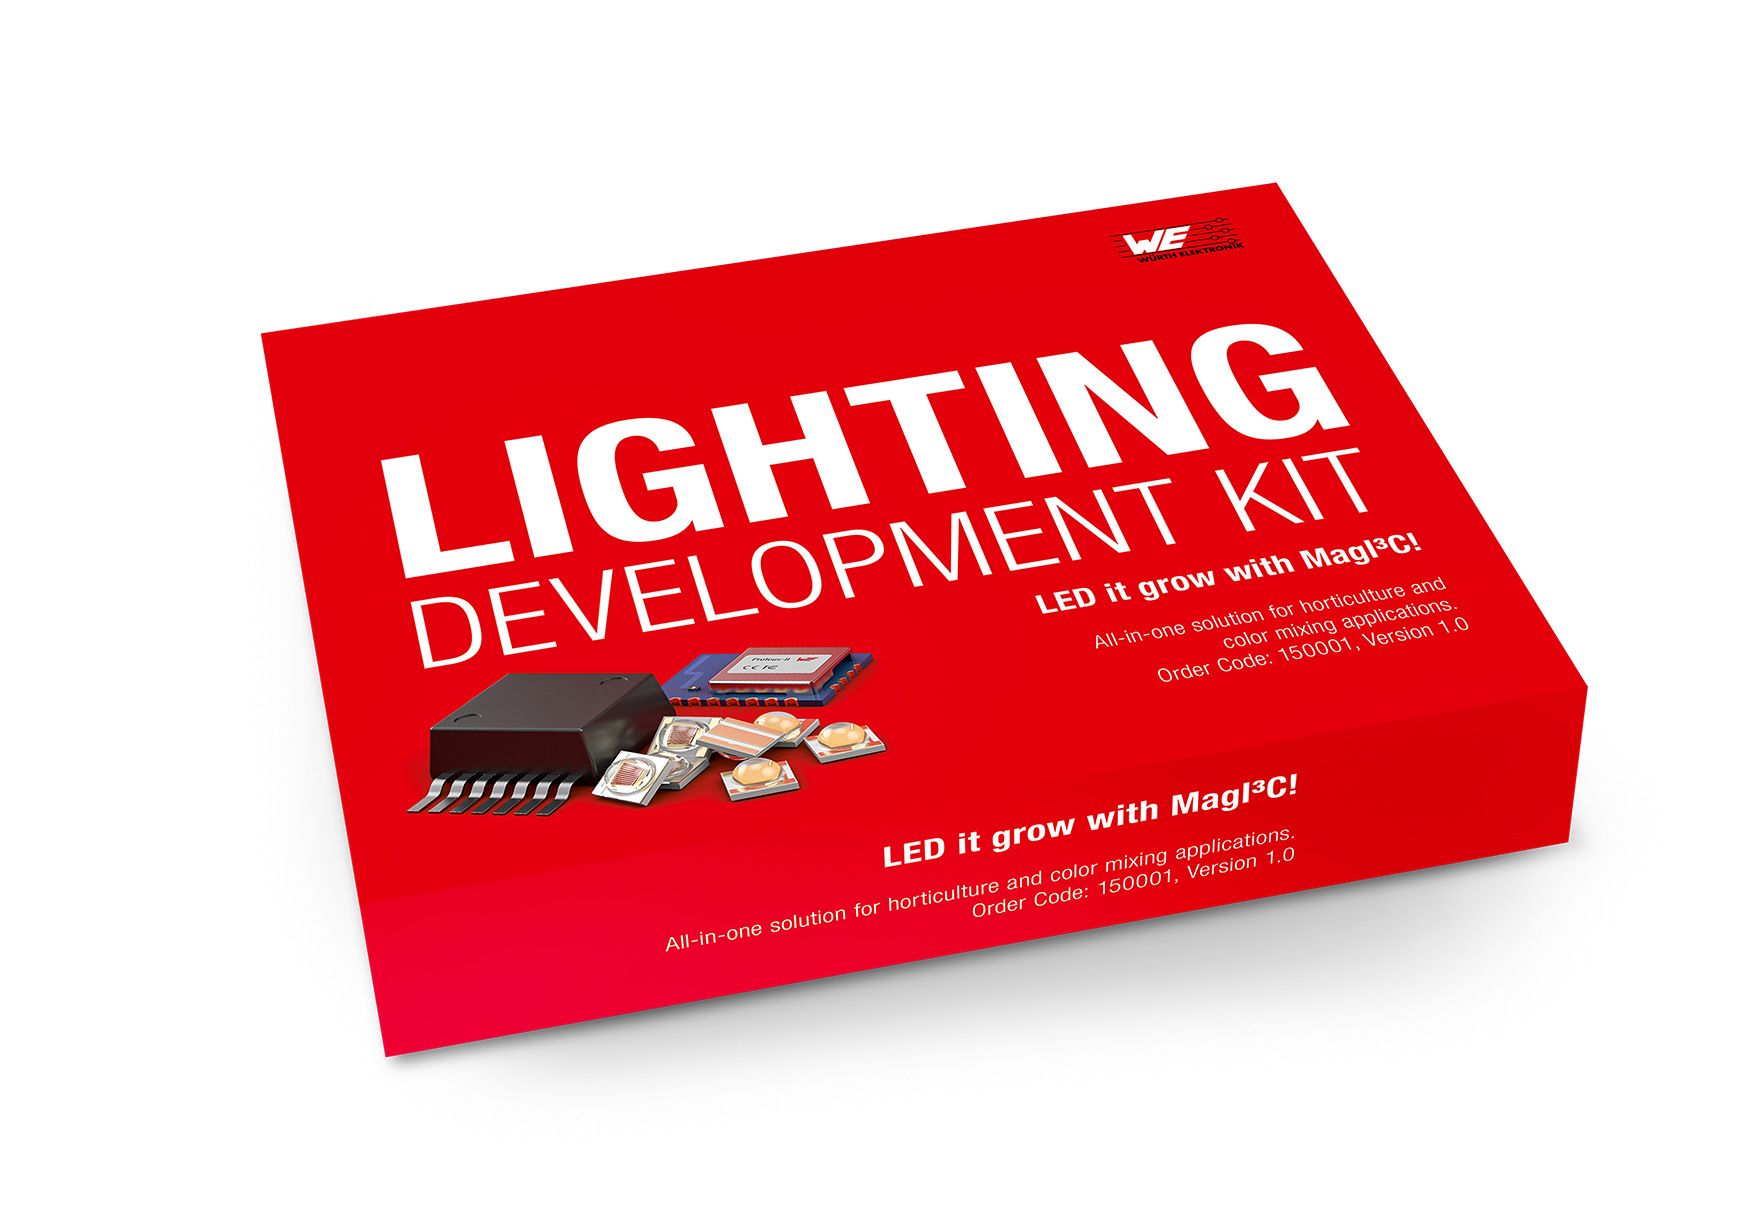 Wurth Elektronik 150001, Lightning Development Kit LED Driver for ?MagI³C Power Module 172 946 001, Microcontroller